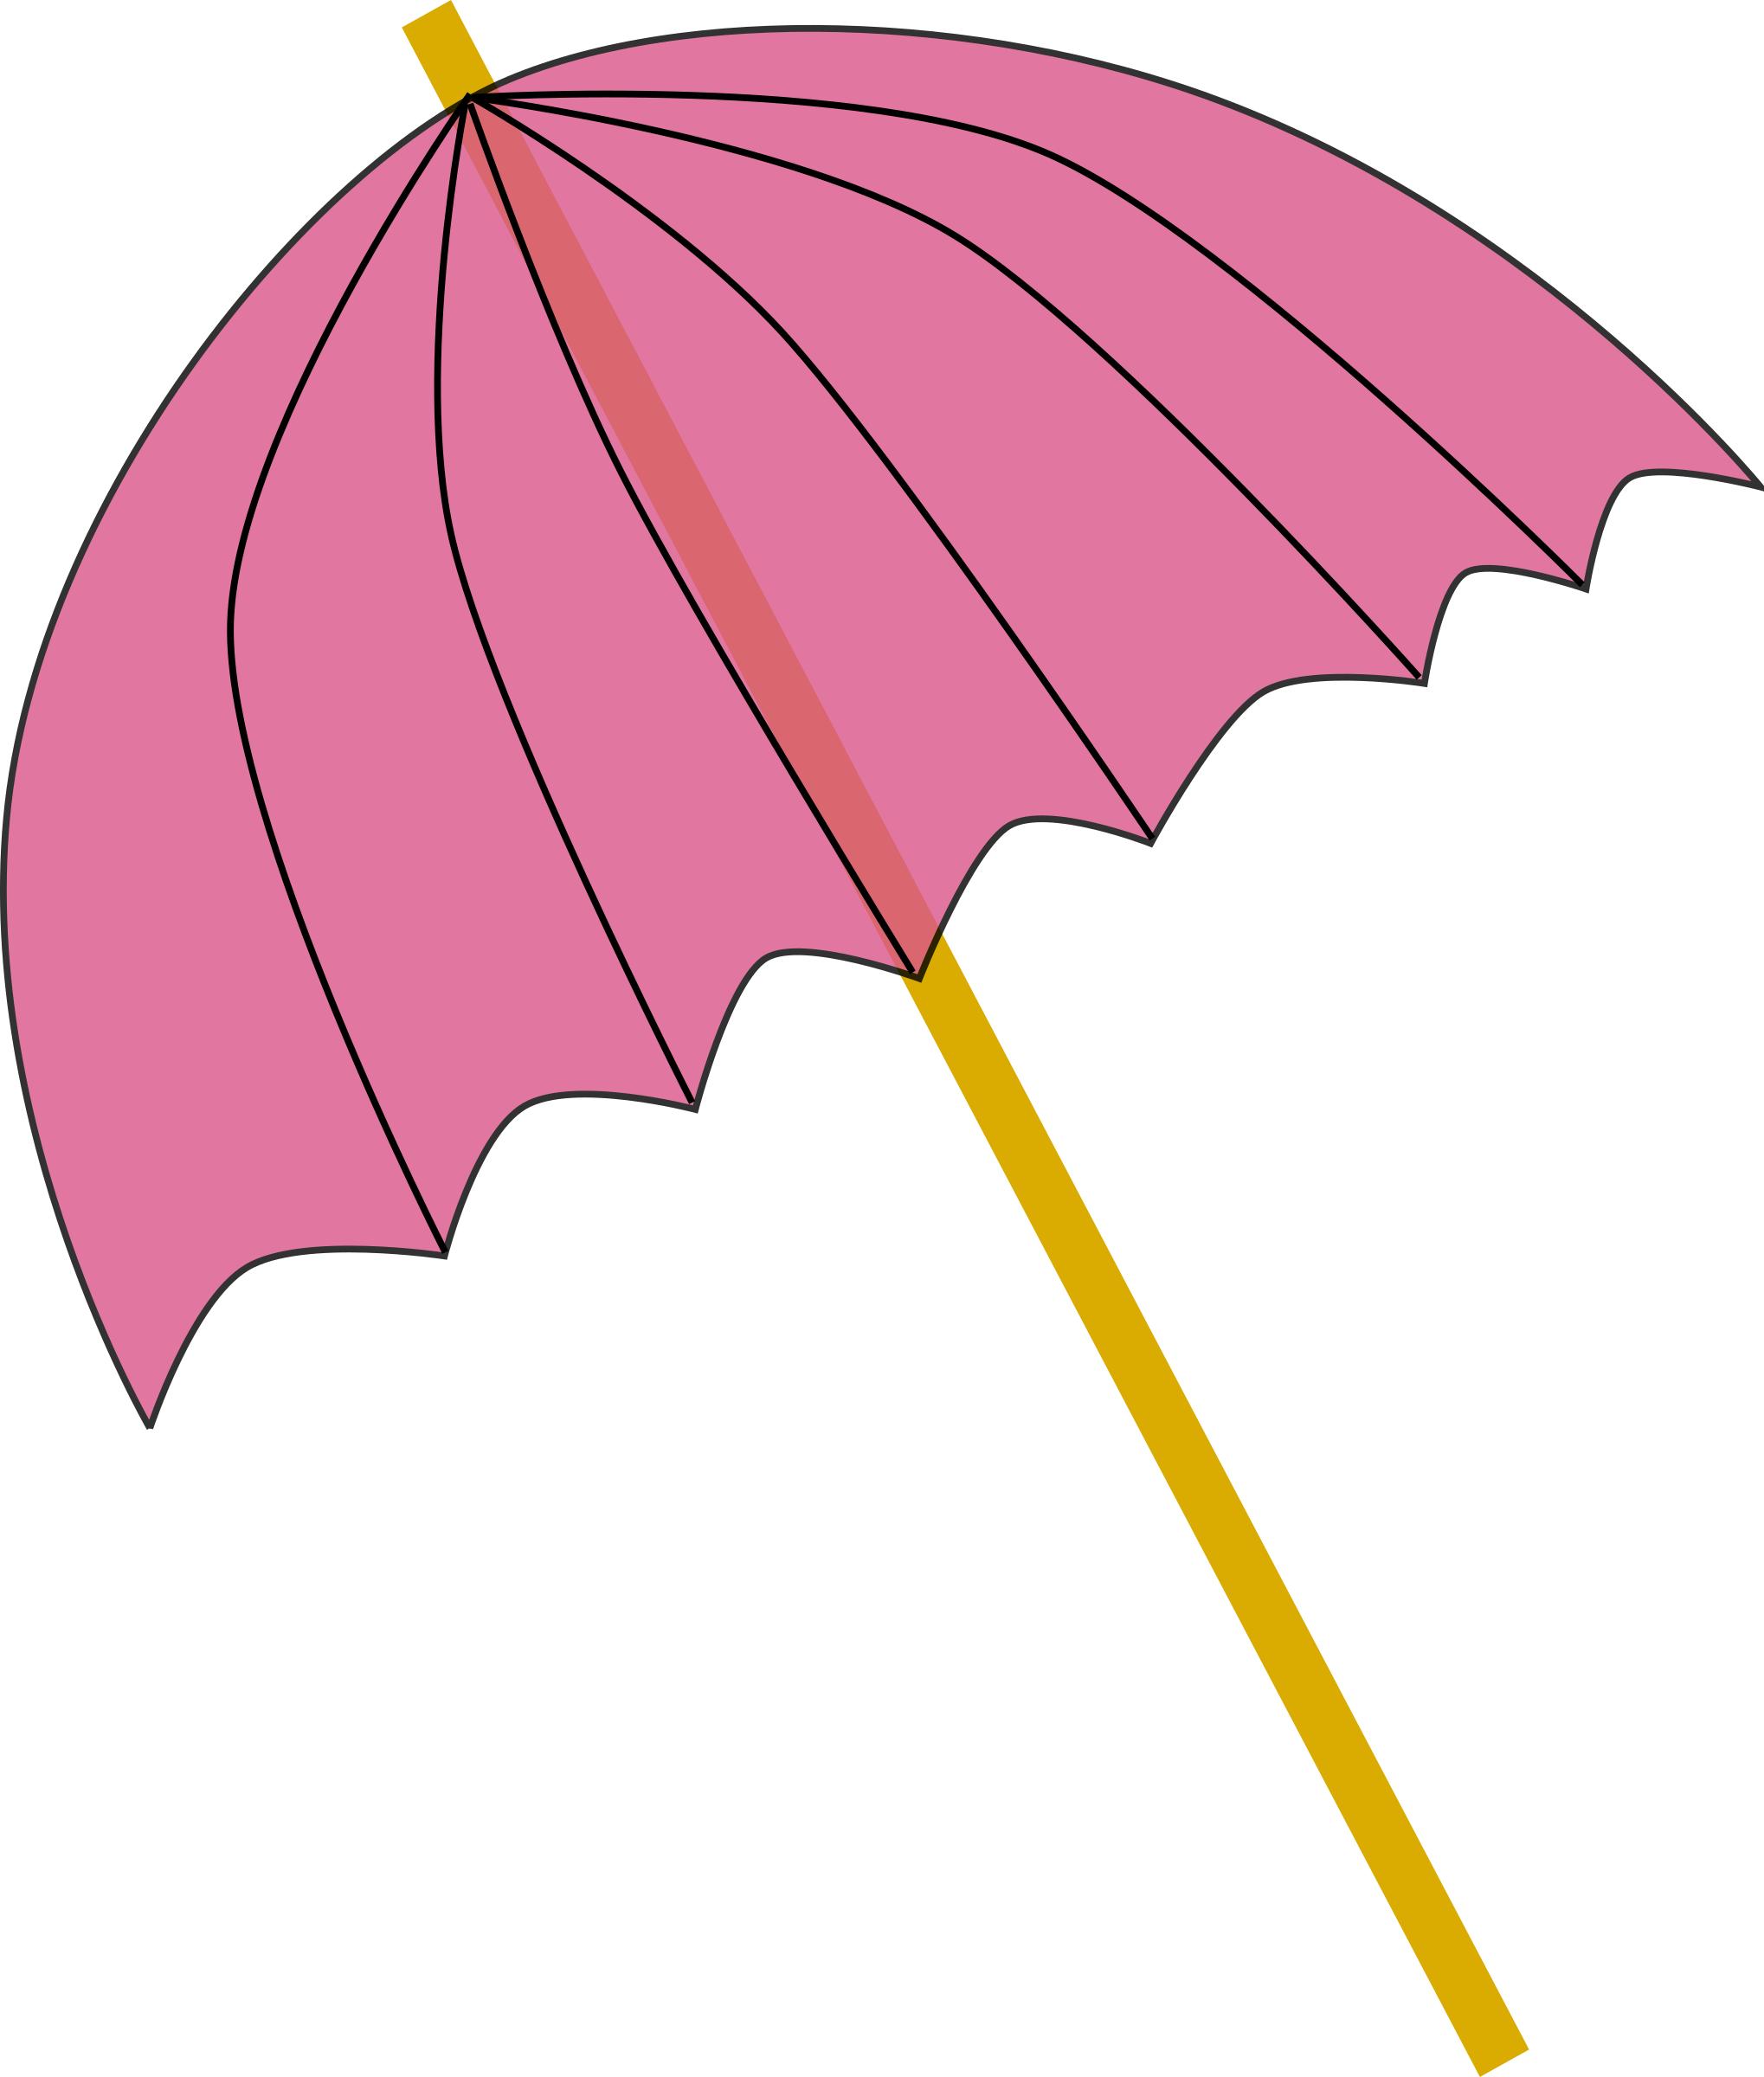 Umbrella / Parasol pink tranparent PNG icons